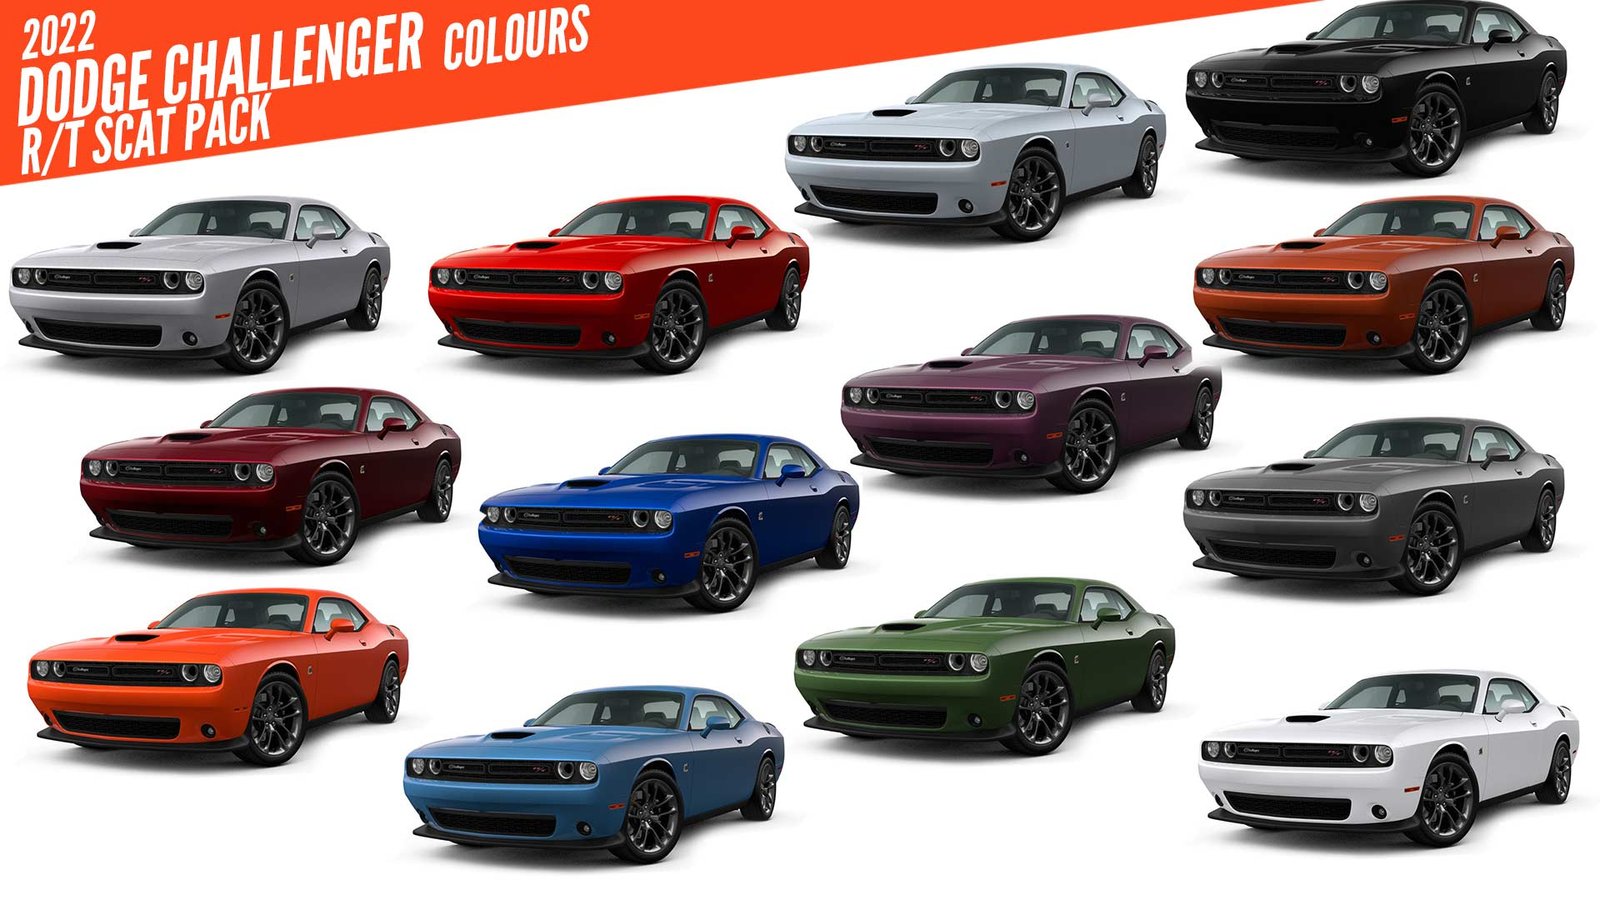 2022 Dodge Challenger R/T Scat Pack - All Color Options - Images